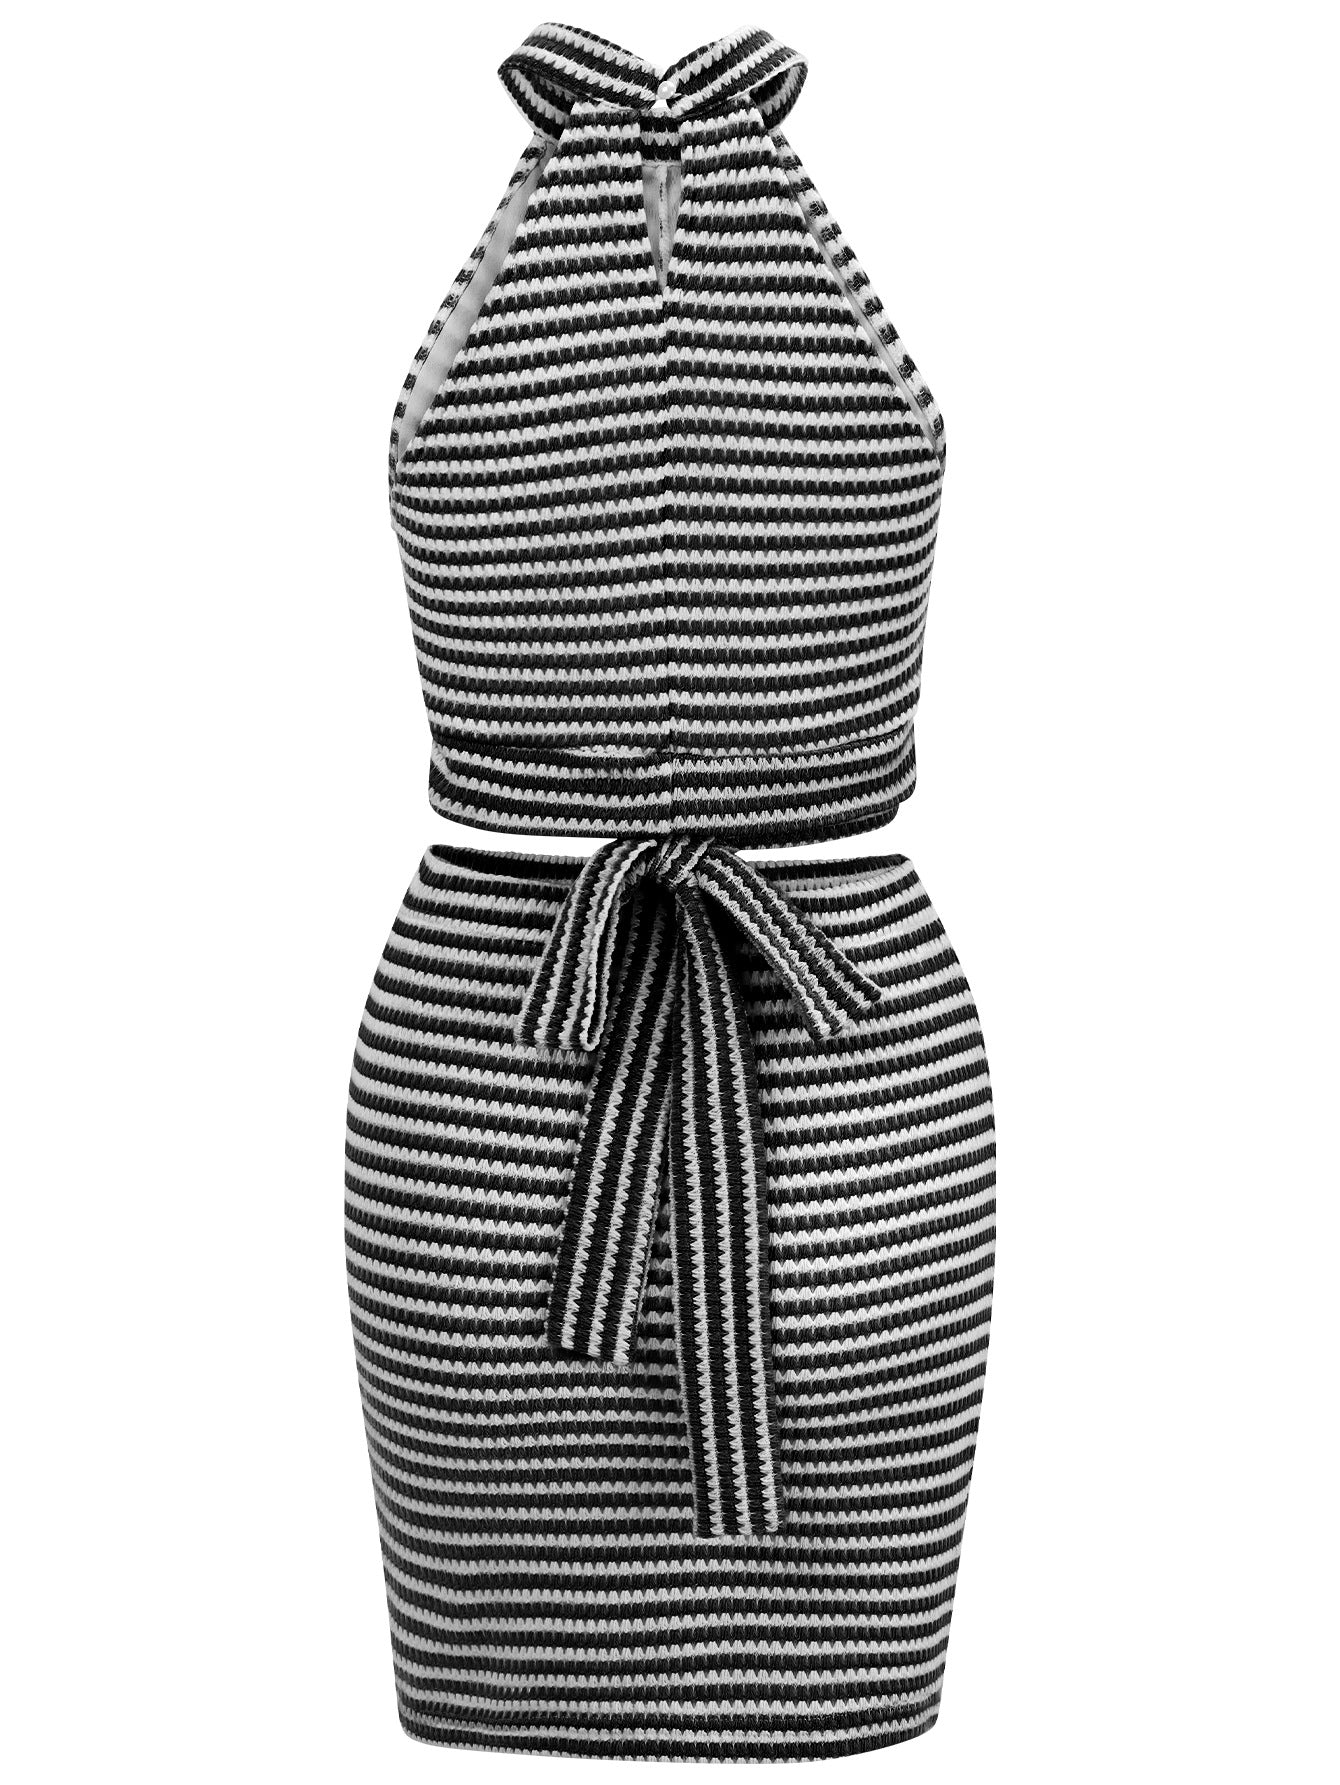 Skirt Set- Striped Summer Women's 2 Piece Set - Halter Top & Bowknot Back Mini Skirt- - Chuzko Women Clothing